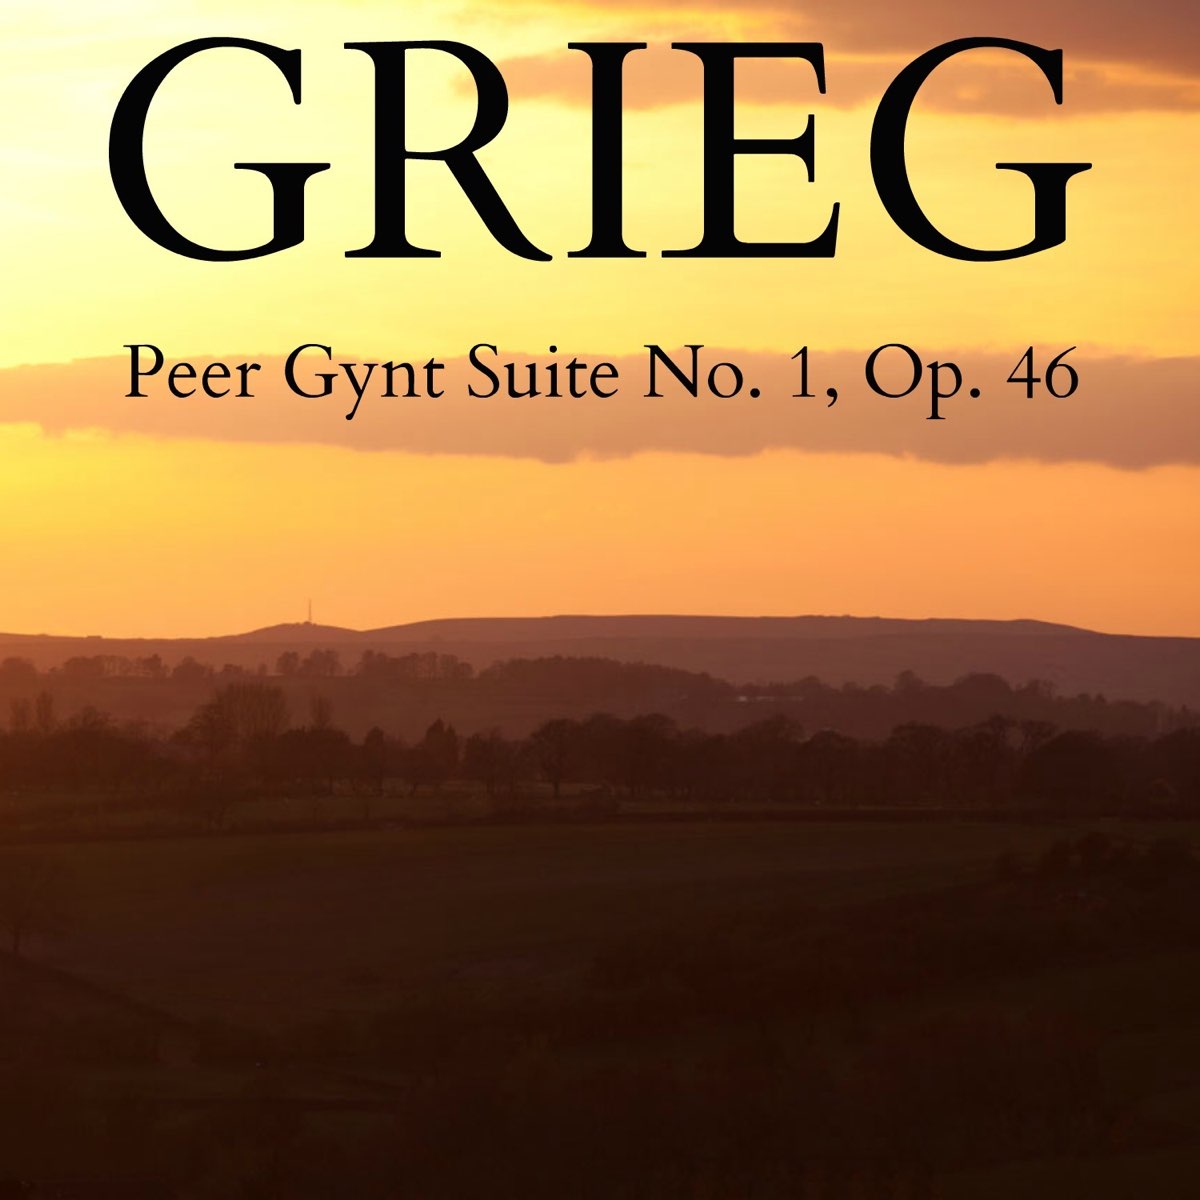 Grieg peer gynt. Grieg: peer Gynt Suite no. 1, in the Hall of the Mountain King. Peer Gynt Suite no 1 op 46 in the Hall. Peer Gynt Suite no. 1, op. 46. Peer Gynt Suite no 1 op 46 no 4.